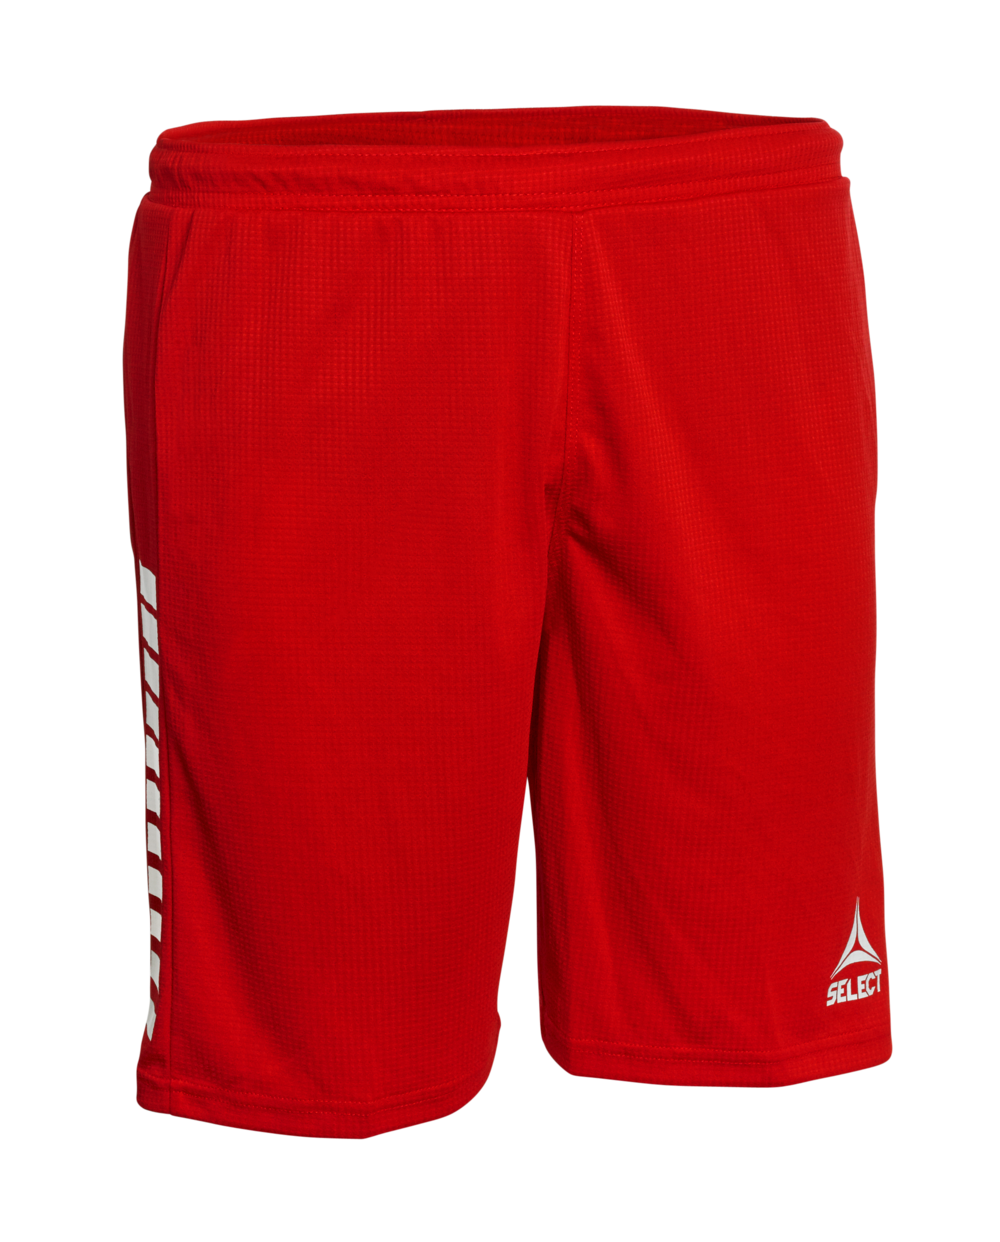 monaco_player_shorts_red